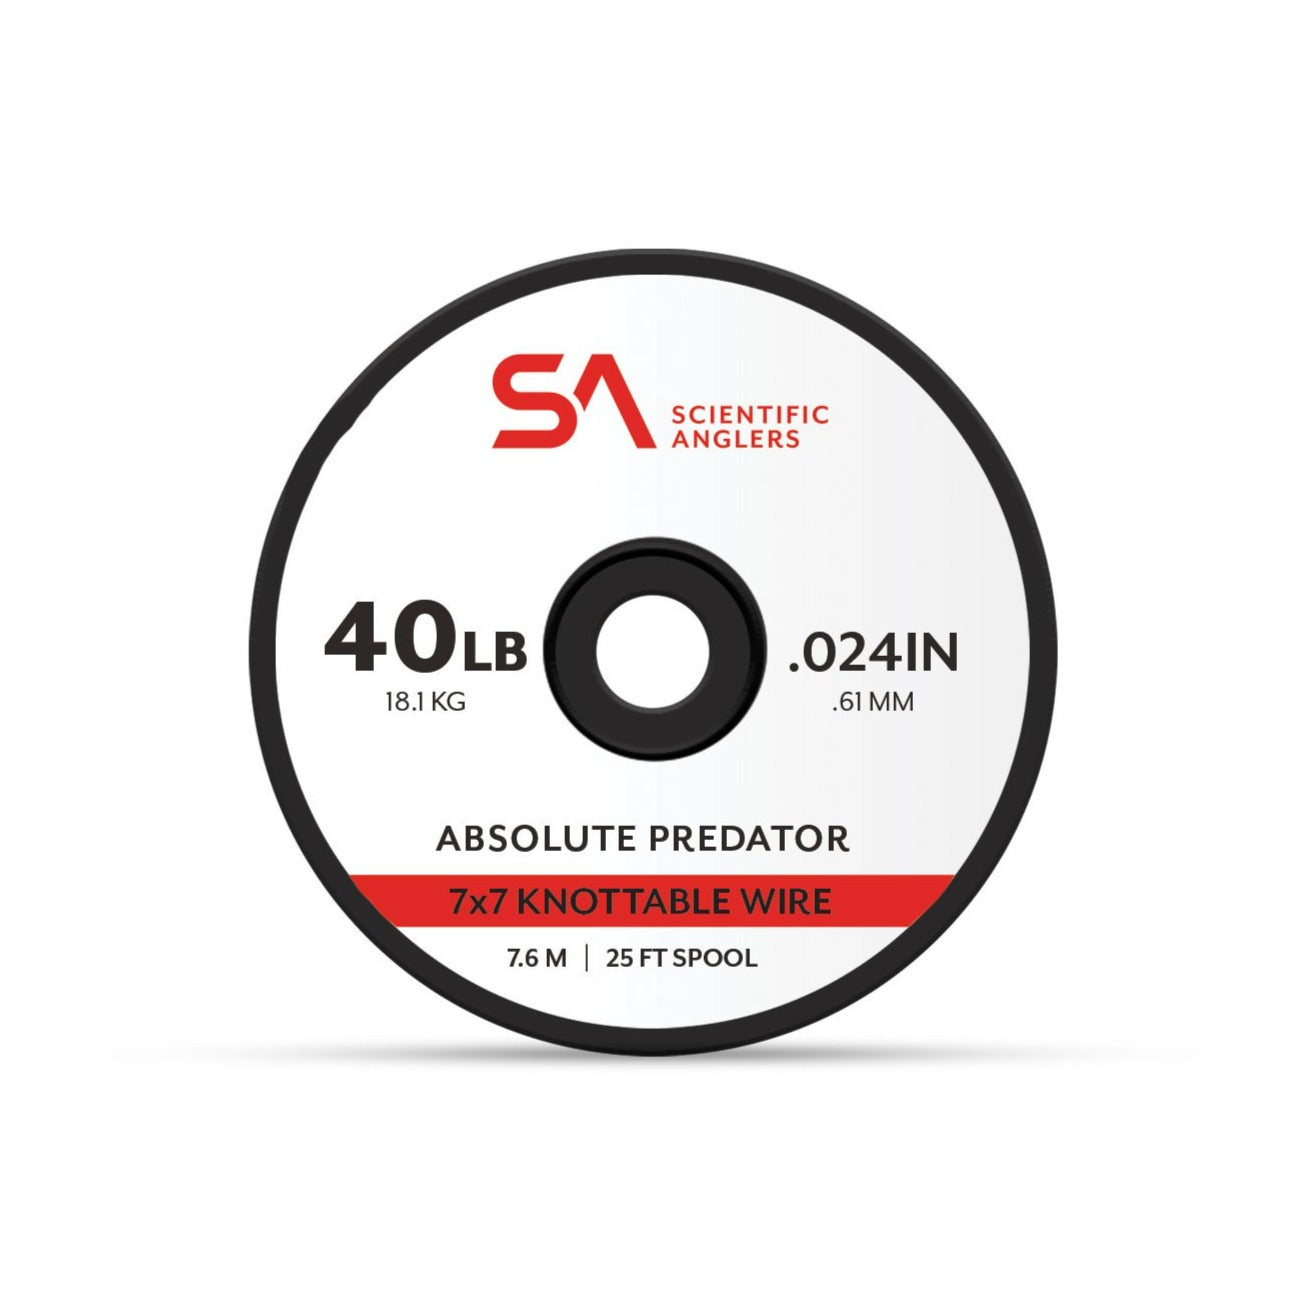 SA Absolute Predator 7x7 Knottable Wire